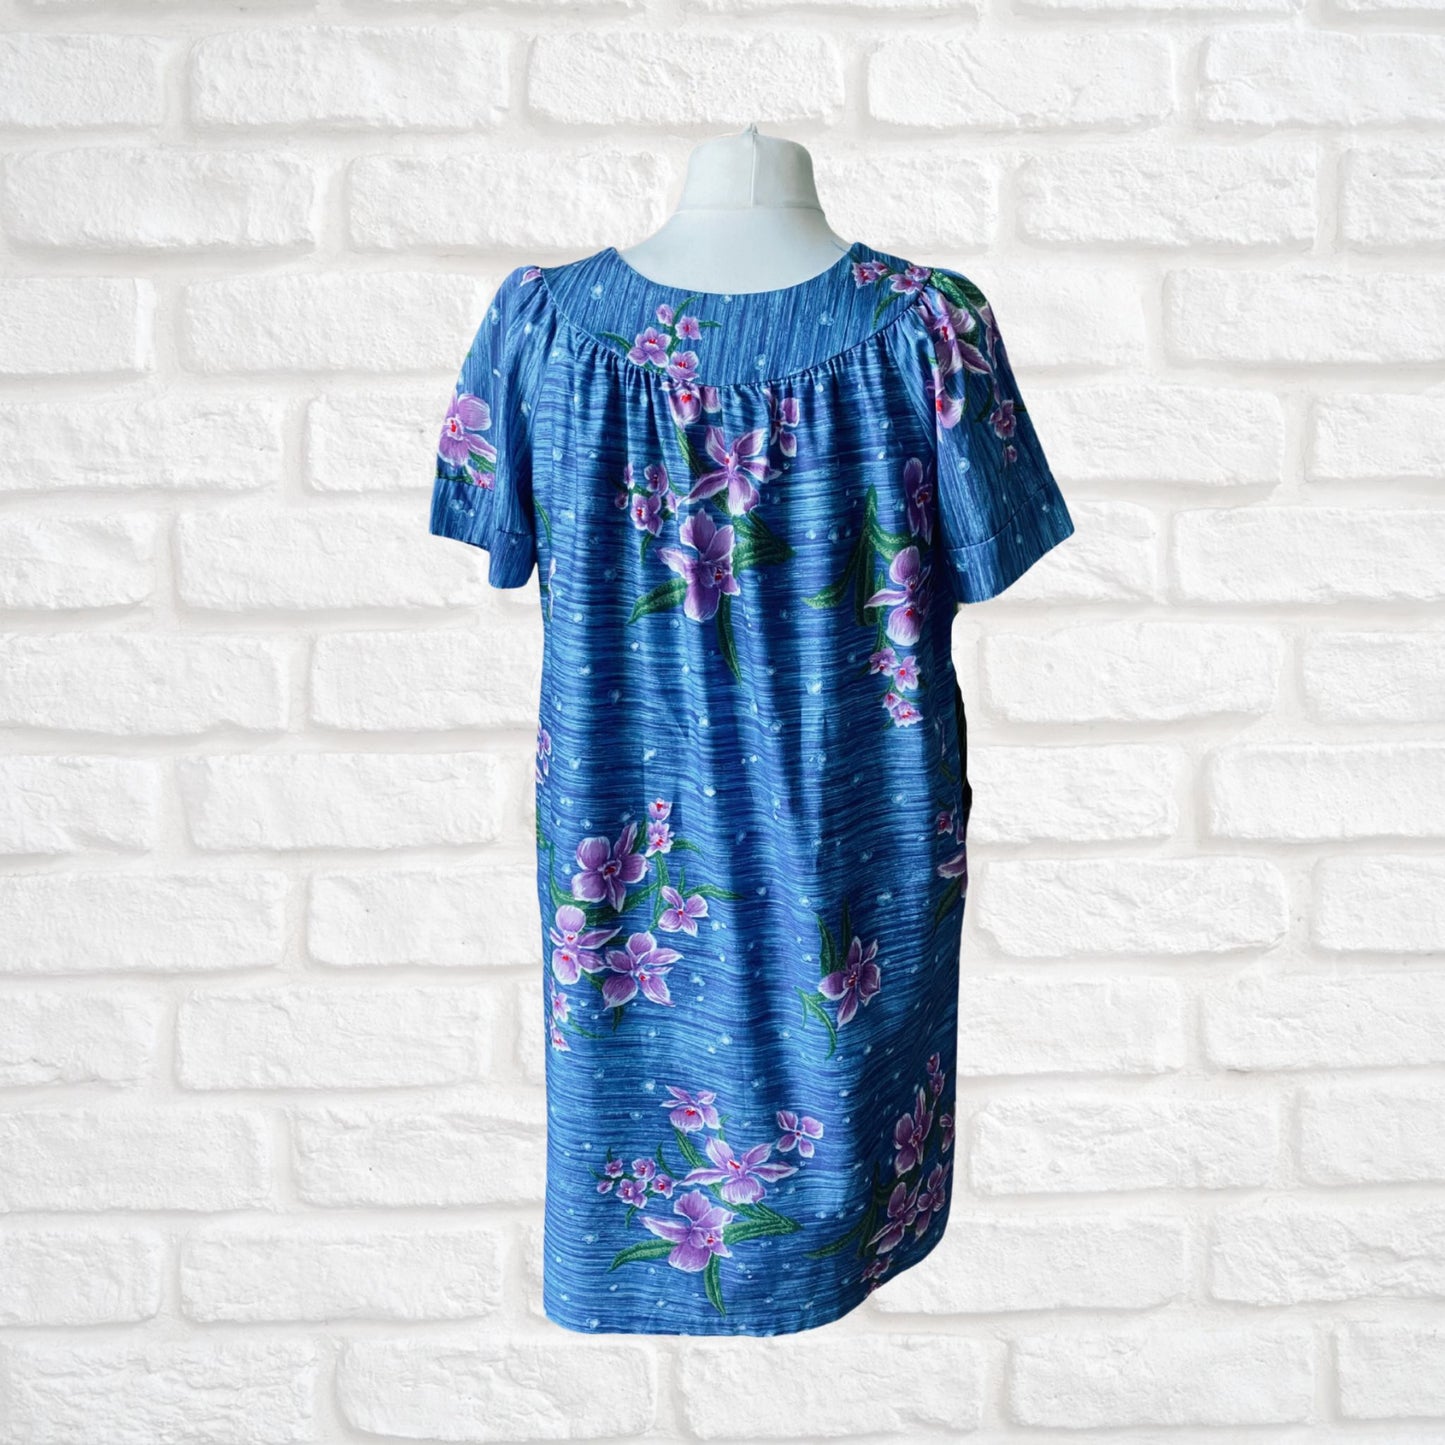 Cotton blue Hawaiian print vintage smock dress/ kaftan. Approx UK size 16-24